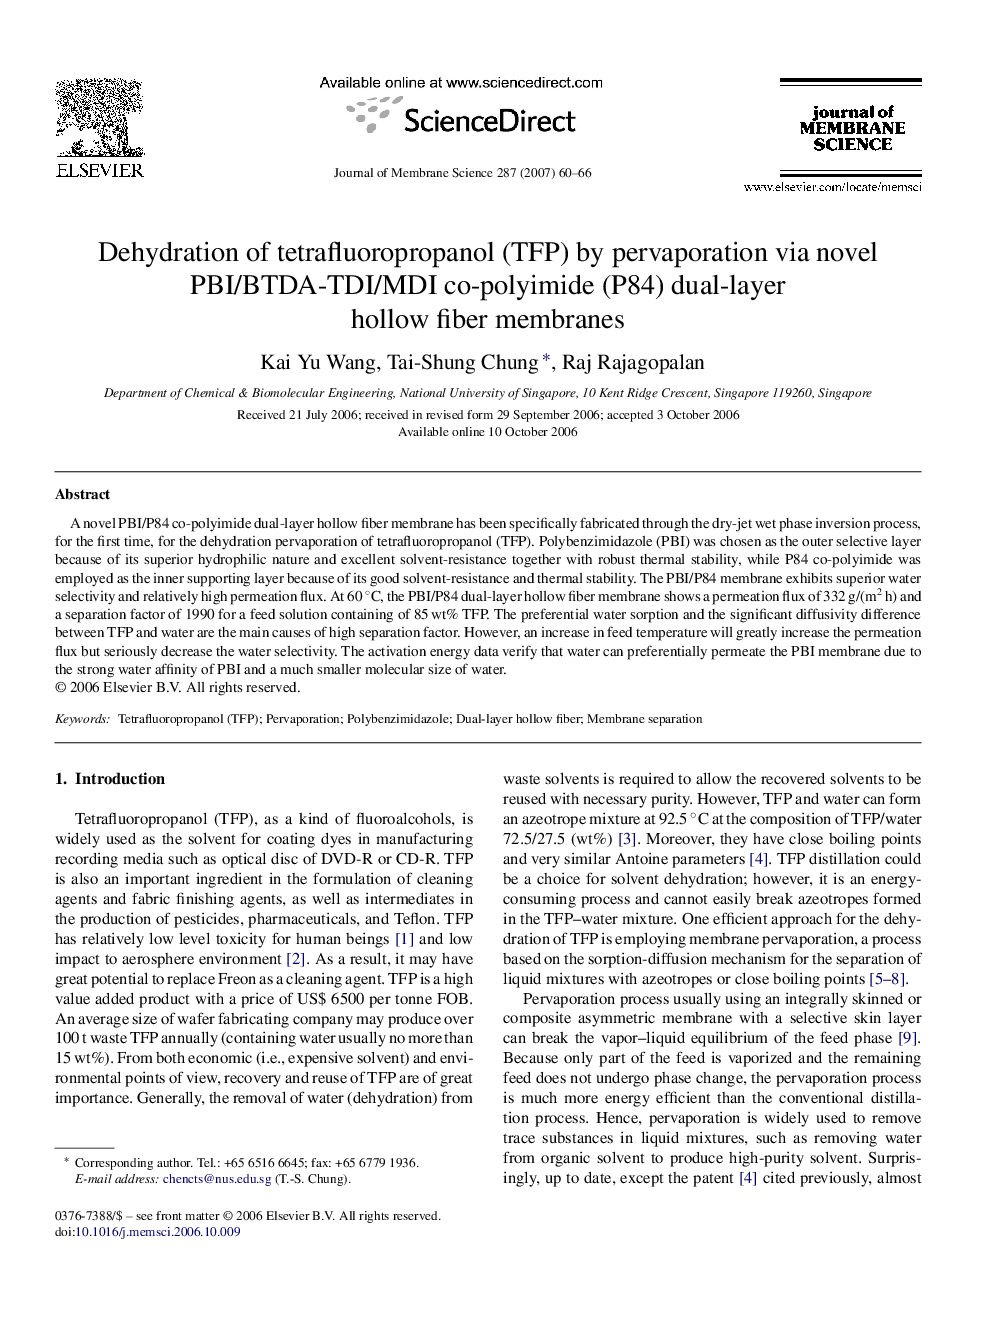 Dehydration of tetrafluoropropanol (TFP) by pervaporation via novel PBI/BTDA-TDI/MDI co-polyimide (P84) dual-layer hollow fiber membranes